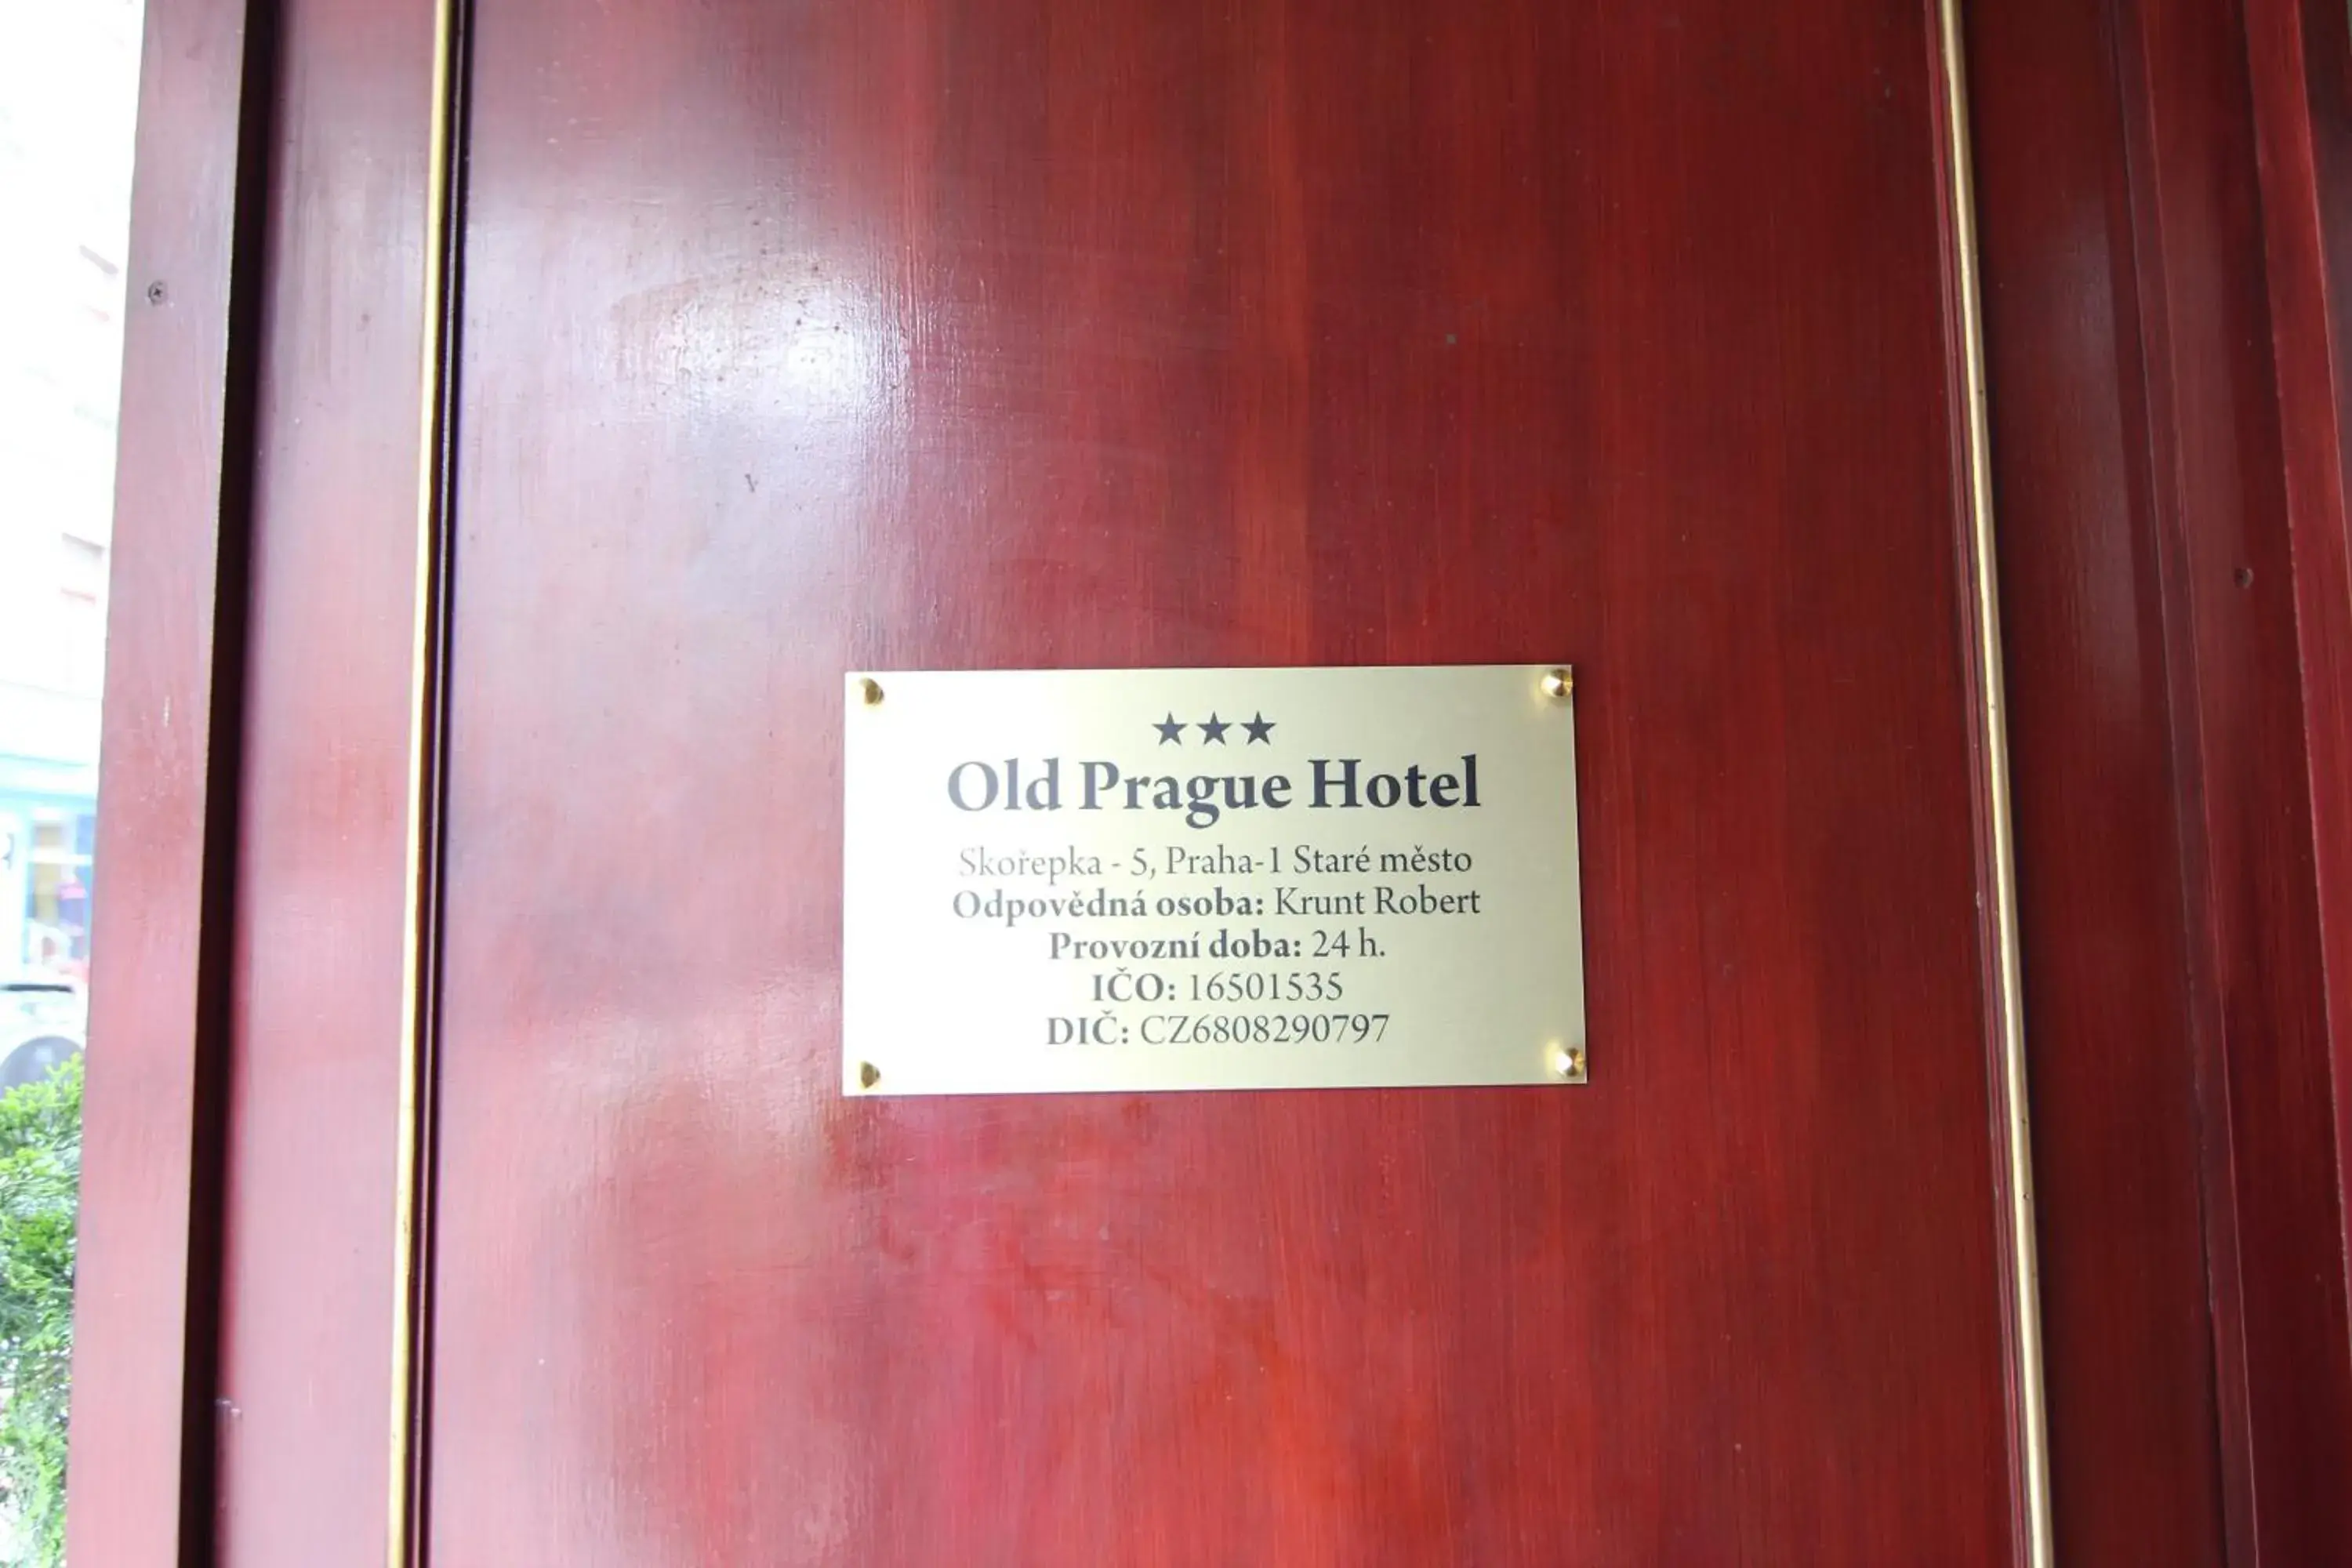 Property logo or sign, Logo/Certificate/Sign/Award in Old Prague Hotel